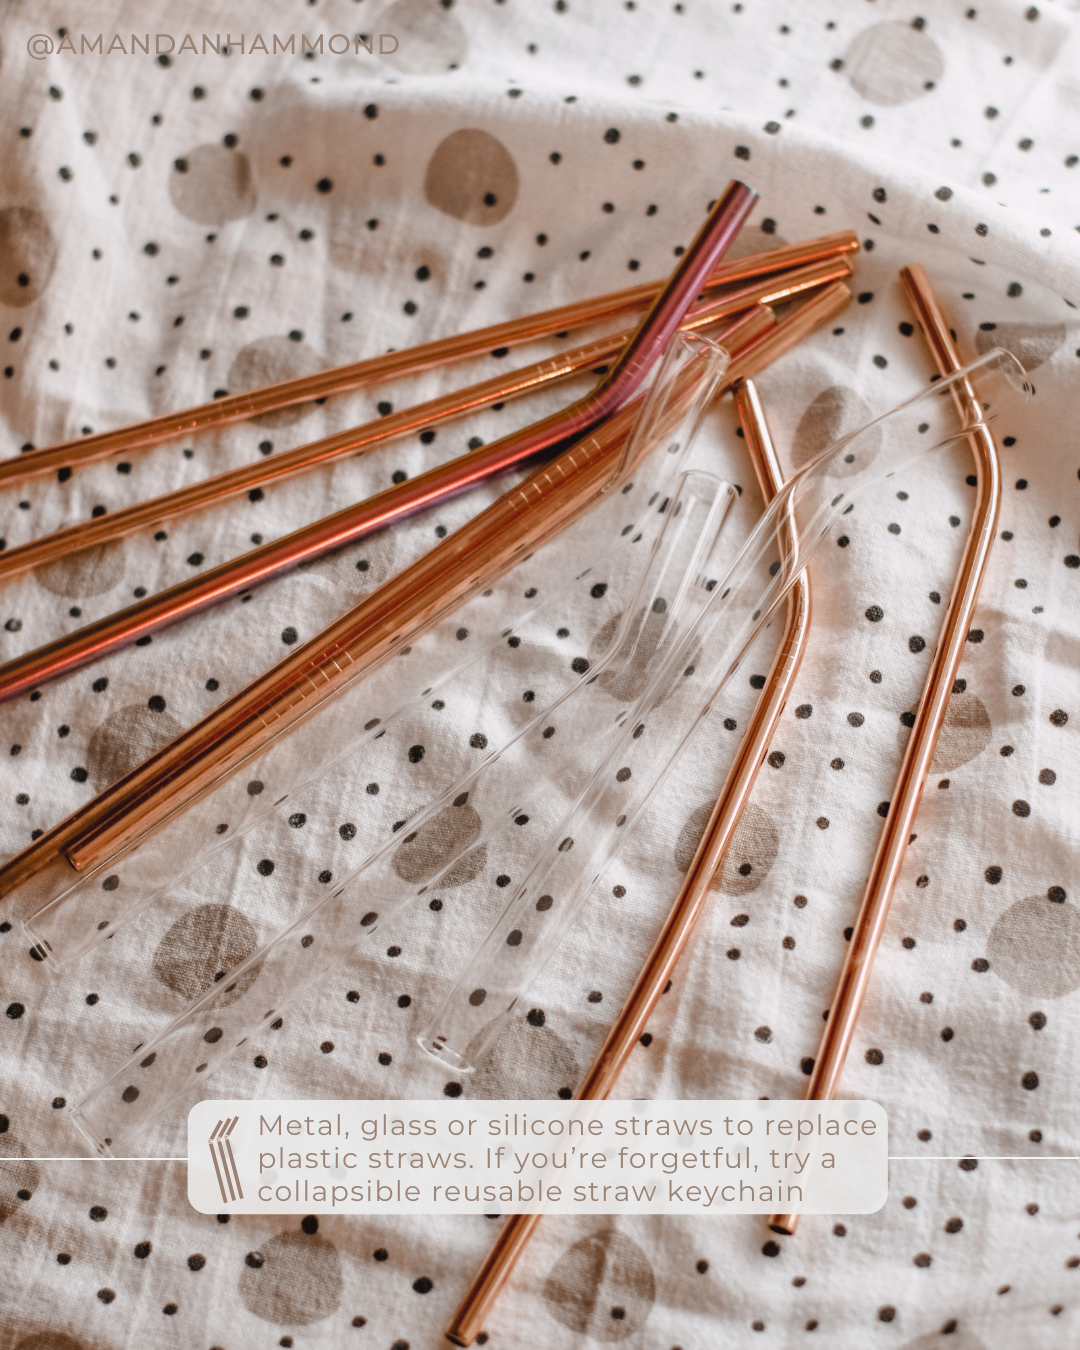 Reusable Straws - Amanda N Hammond